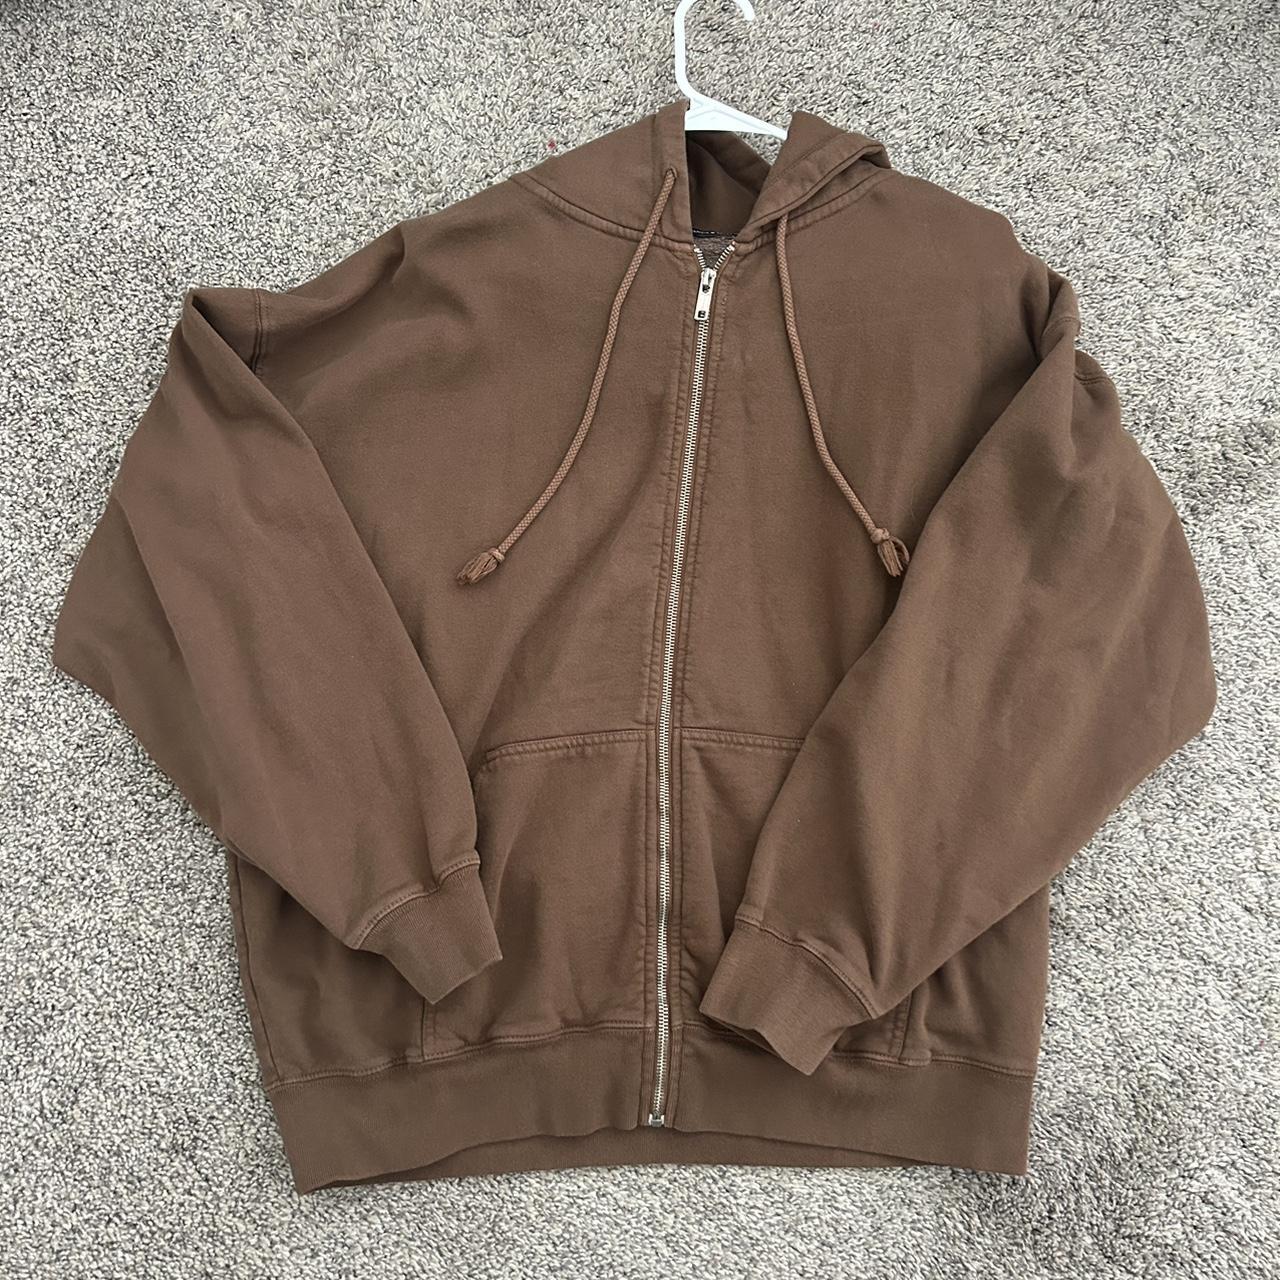 Repop brandy Melville brown oversized zip up hoodie - Depop